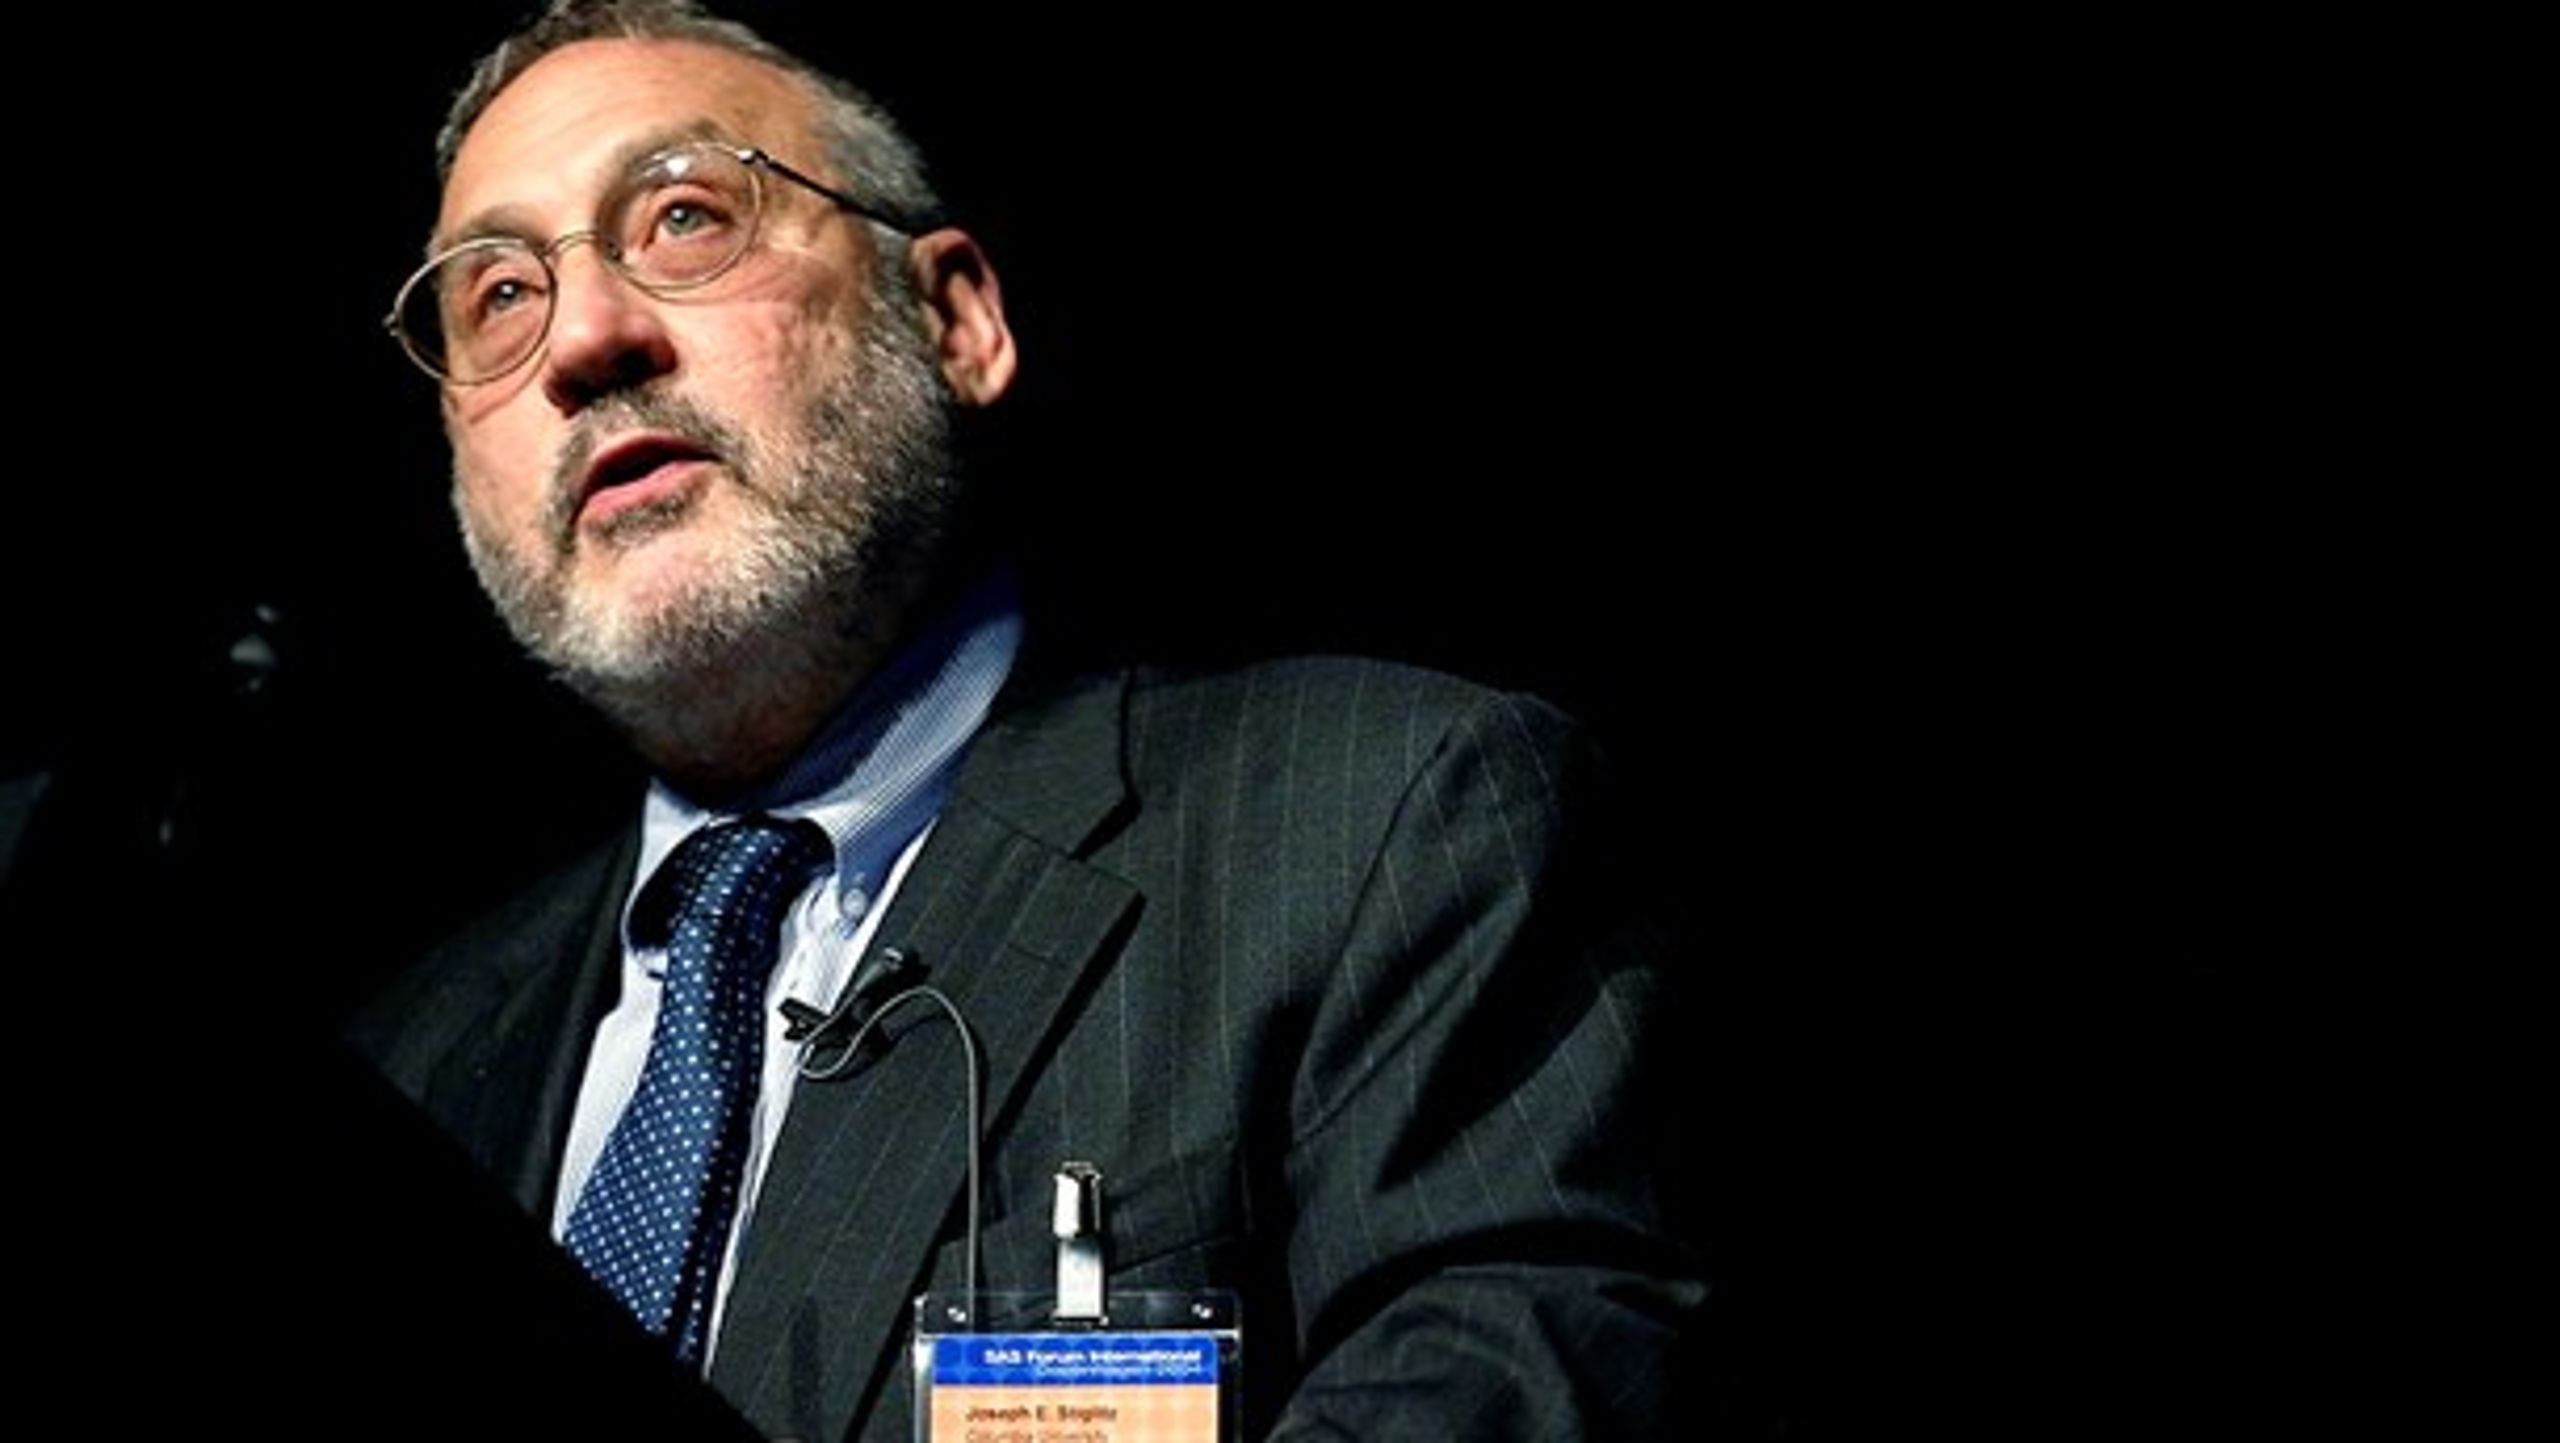 Økonom Joseph Stiglitz var den 16. november inviteret til at tale for Europa-Parlamentet om sine anbefalinger for at bekæmpe skatteunddragelse i skattely.